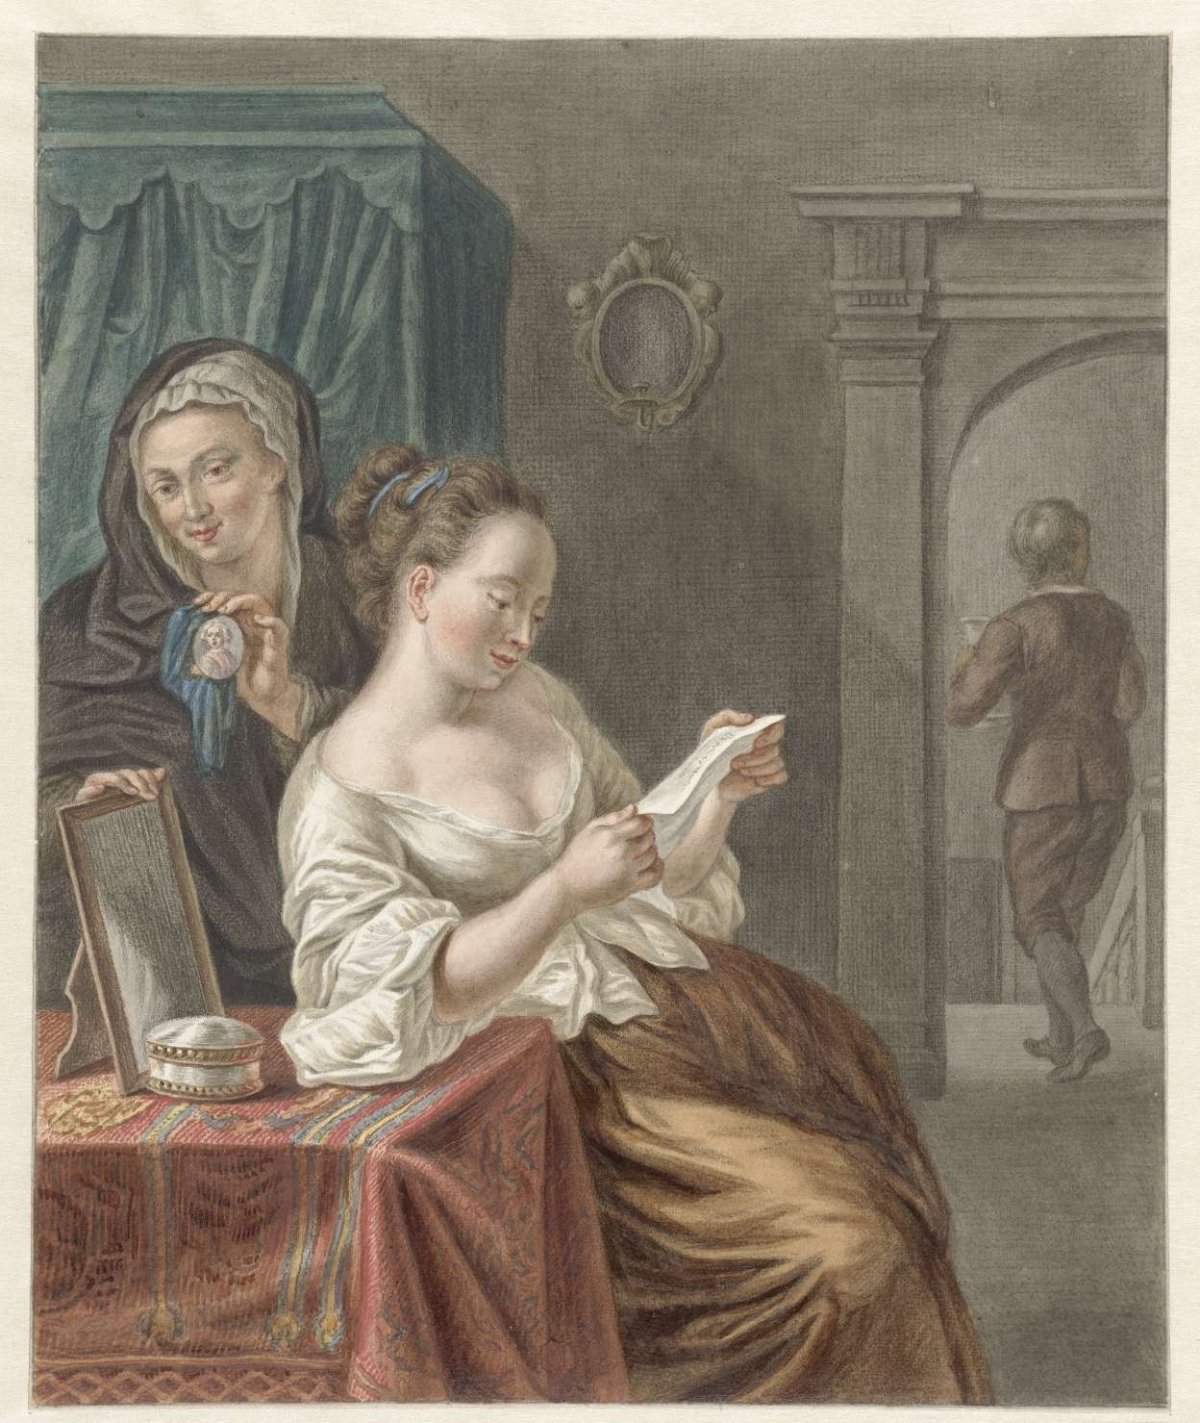 The letter reader, Abraham Delfos, 1795